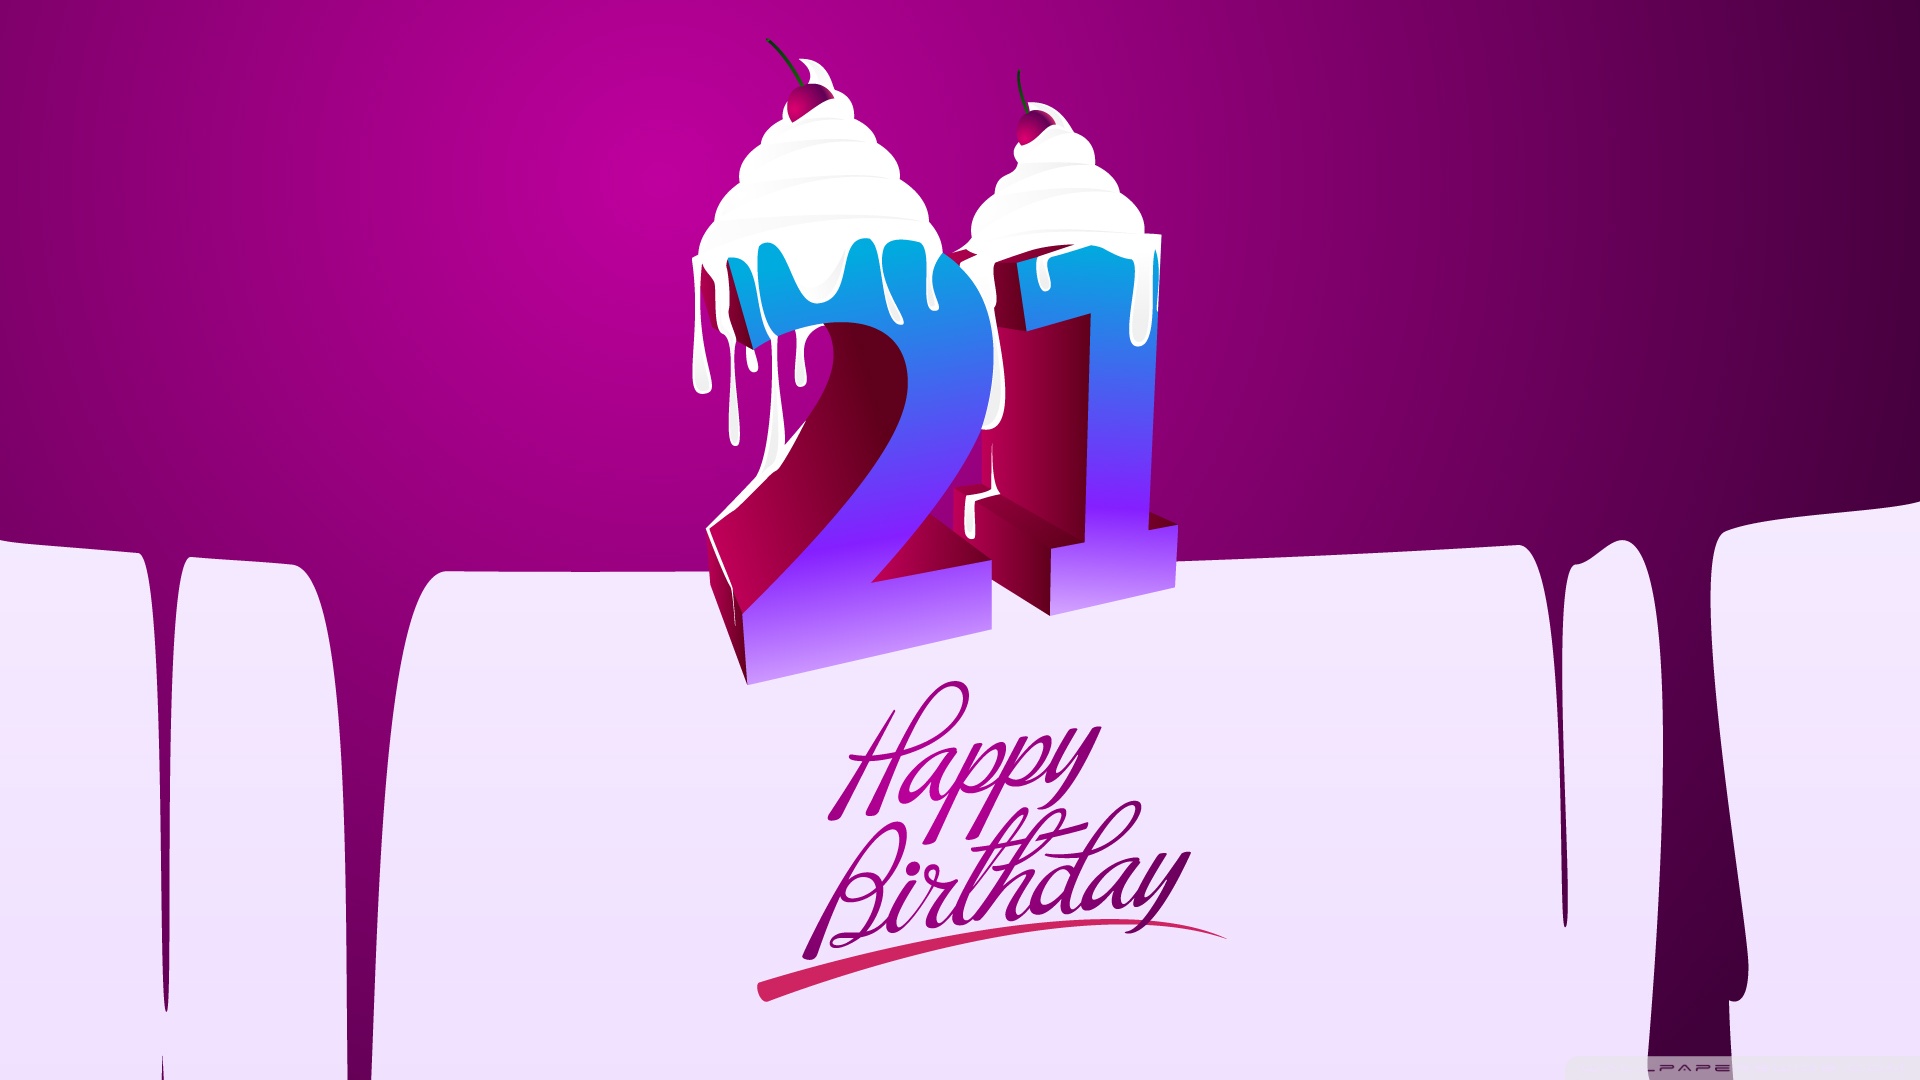 Free Download 21 Happy Birthday 4k Hd Desktop Wallpaper For 4k